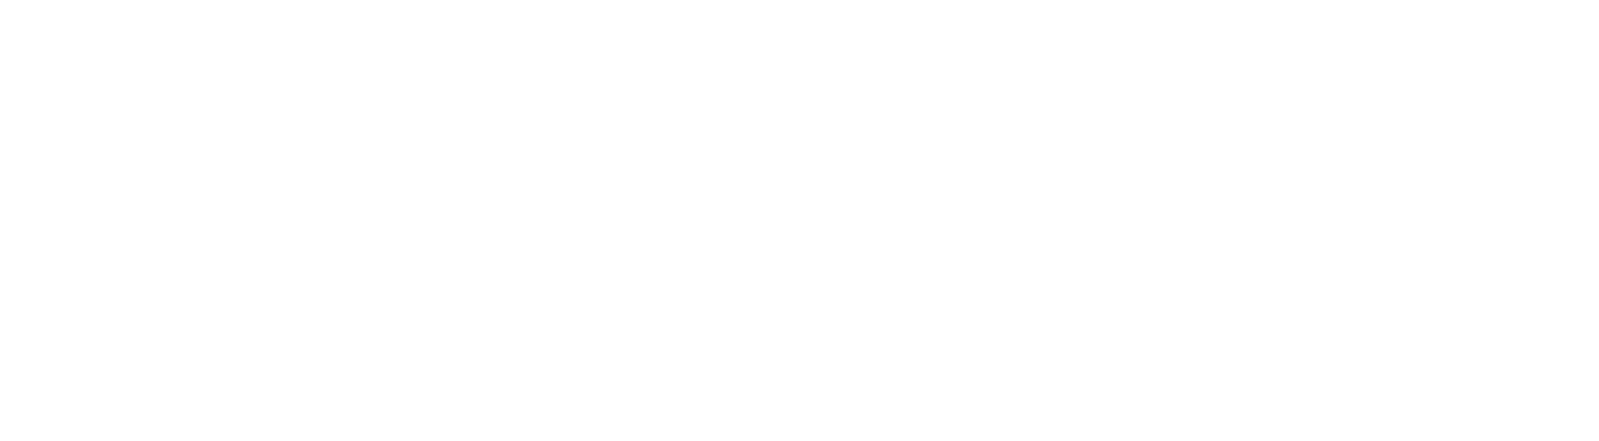 United Therapeutics Logo groß für dunkle Hintergründe (transparentes PNG)